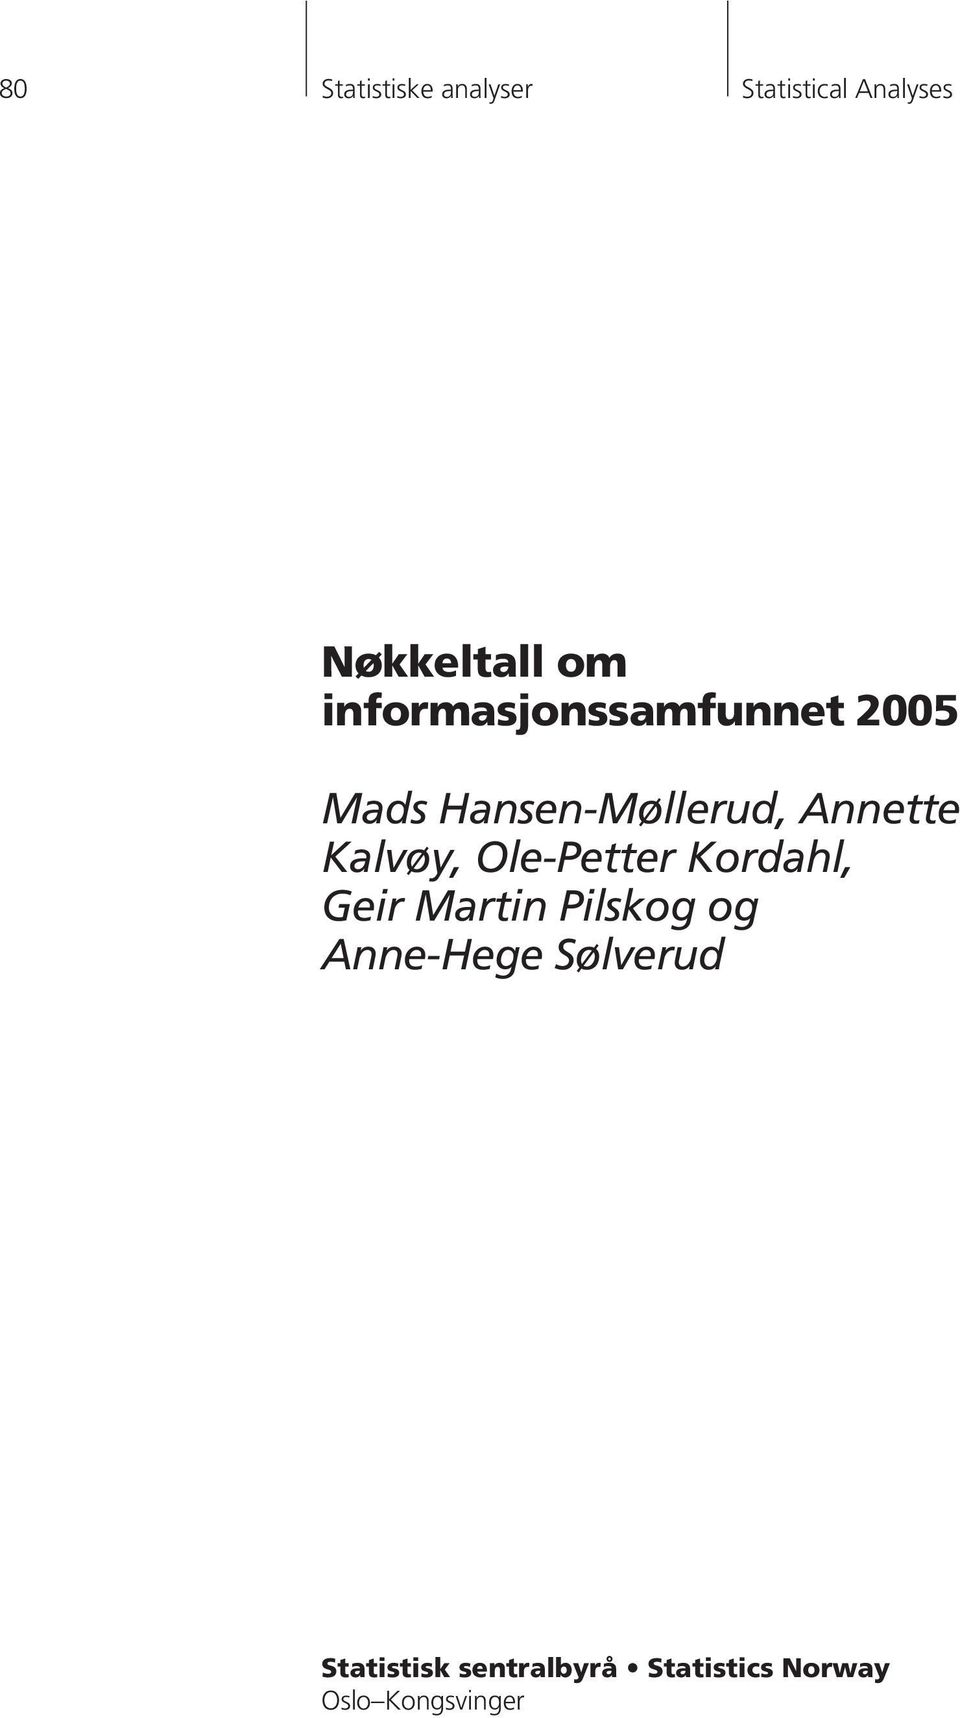 Kalvøy, Ole-Petter Kordahl, Geir Martin Pilskog og Anne-Hege